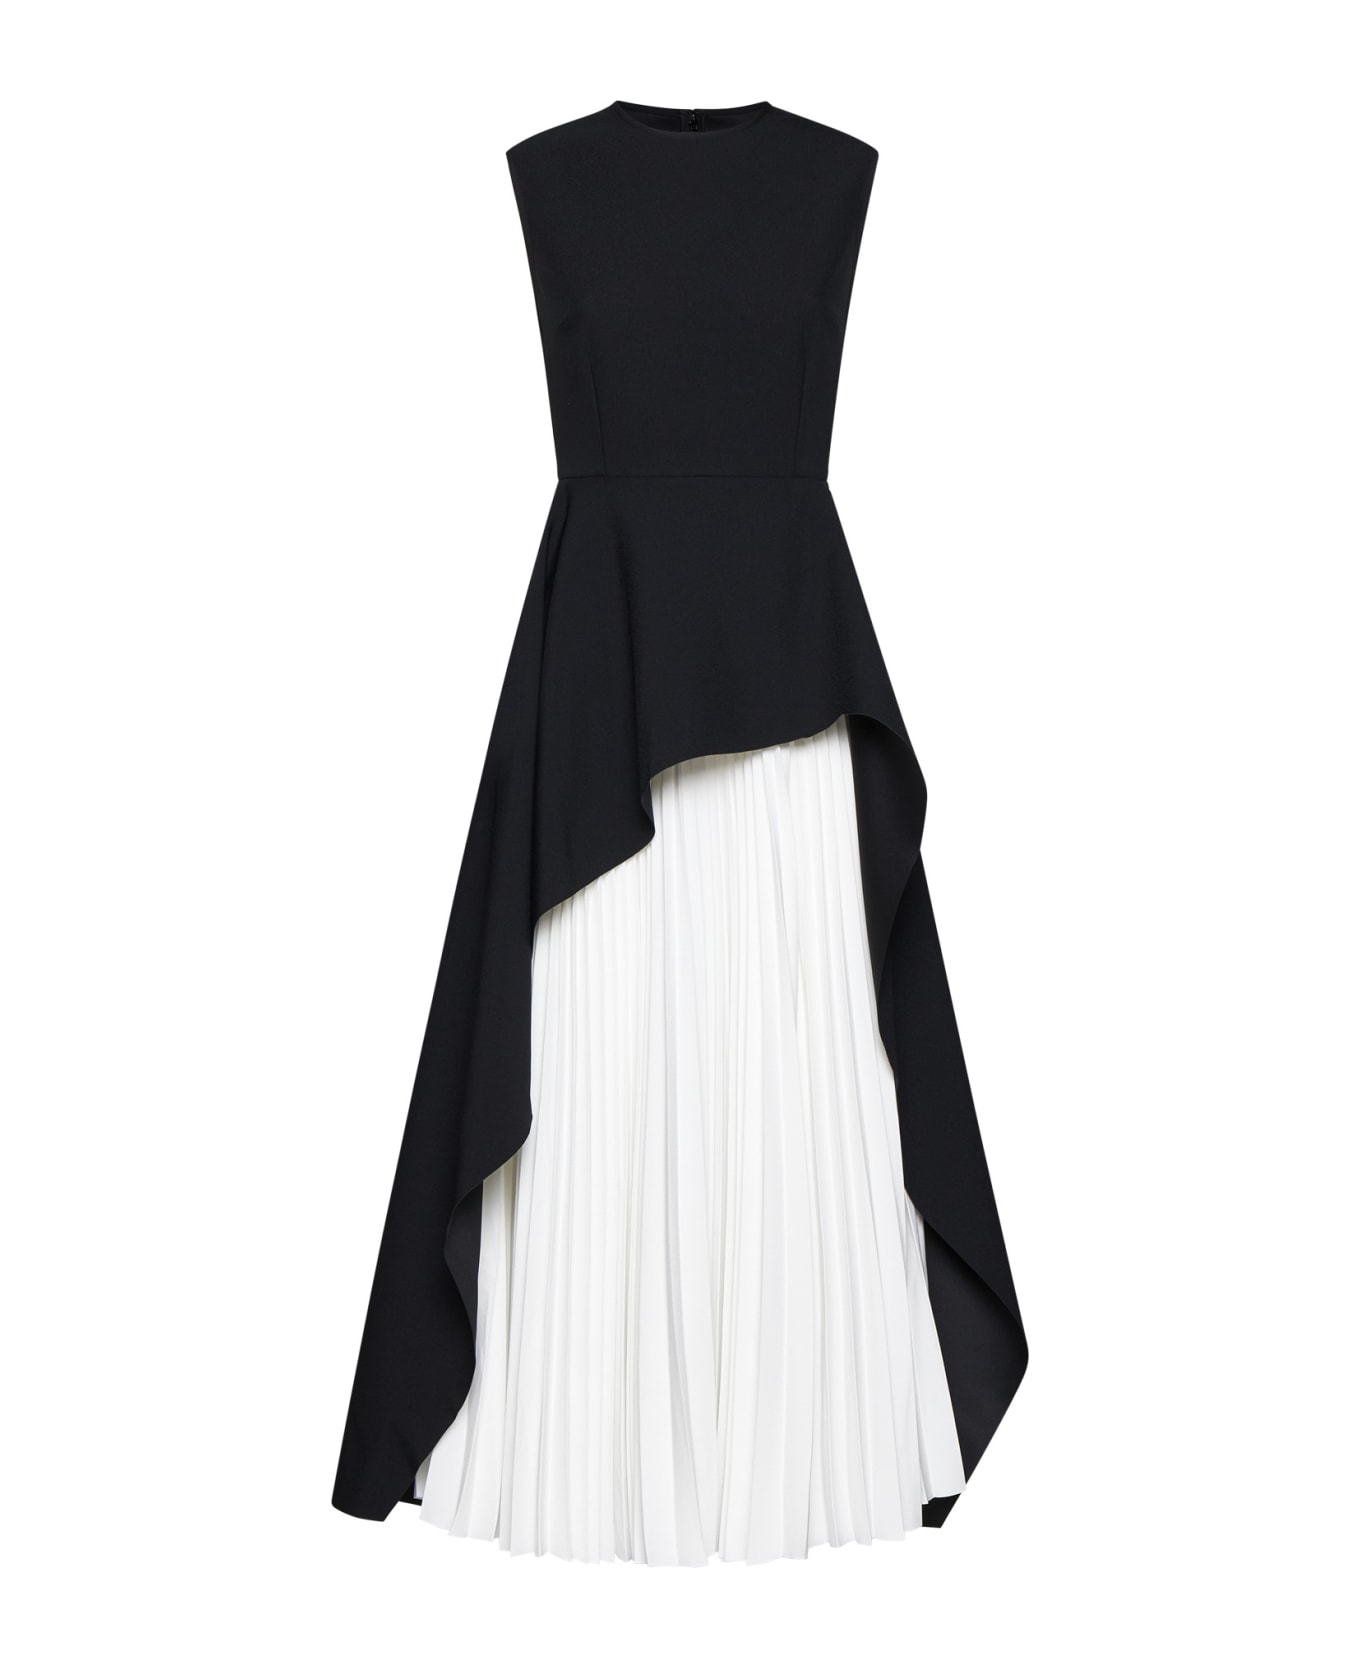 Solace London Dress - Black/cream